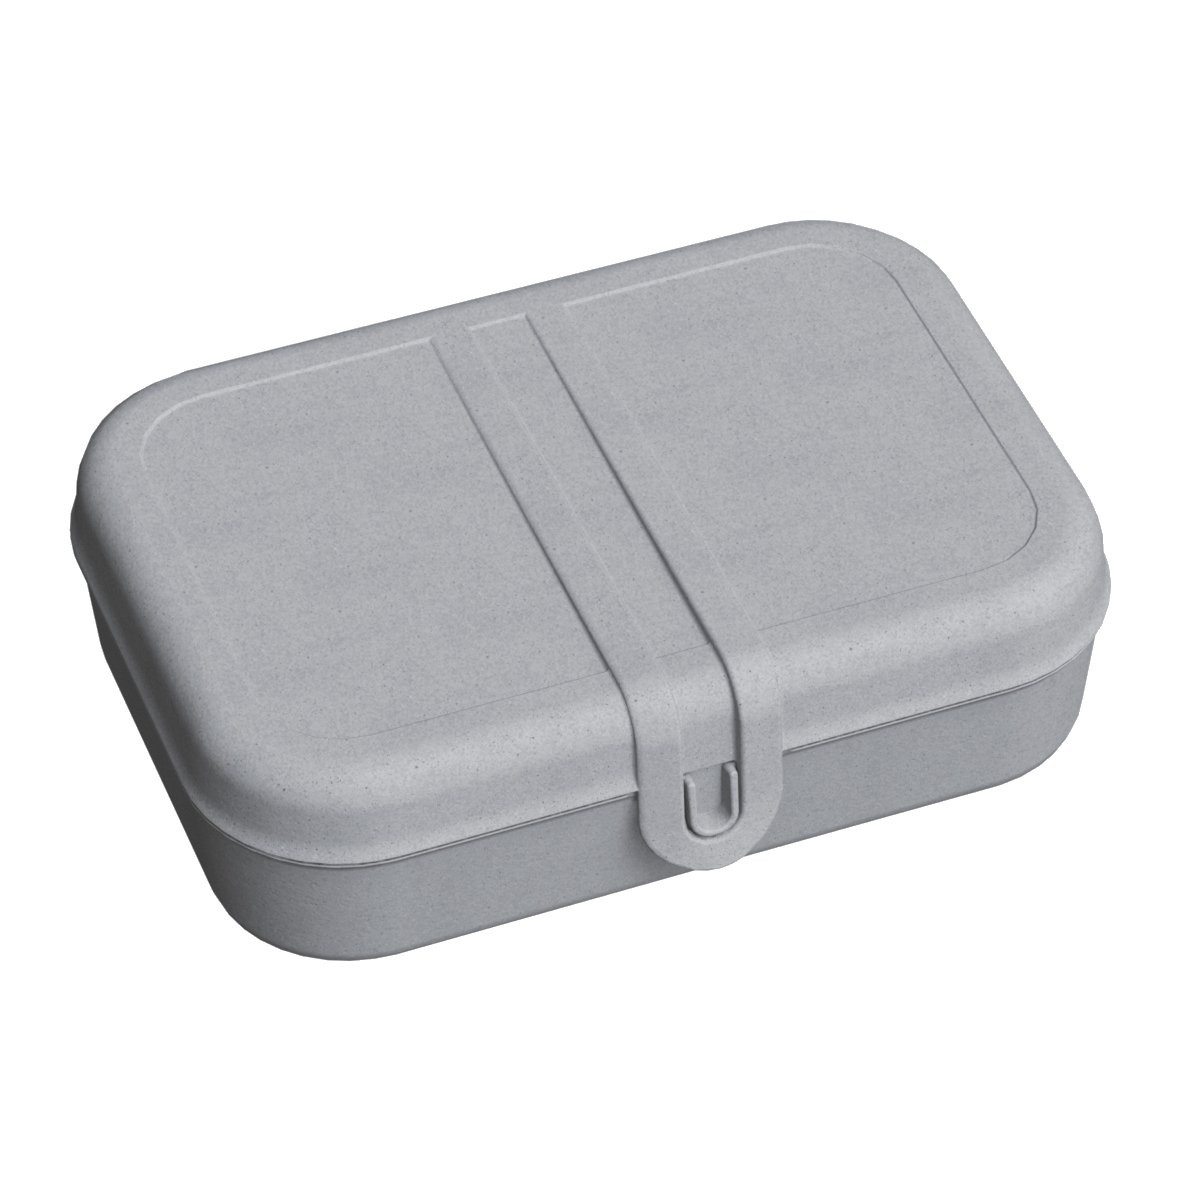 Lunchbox PASCAL L